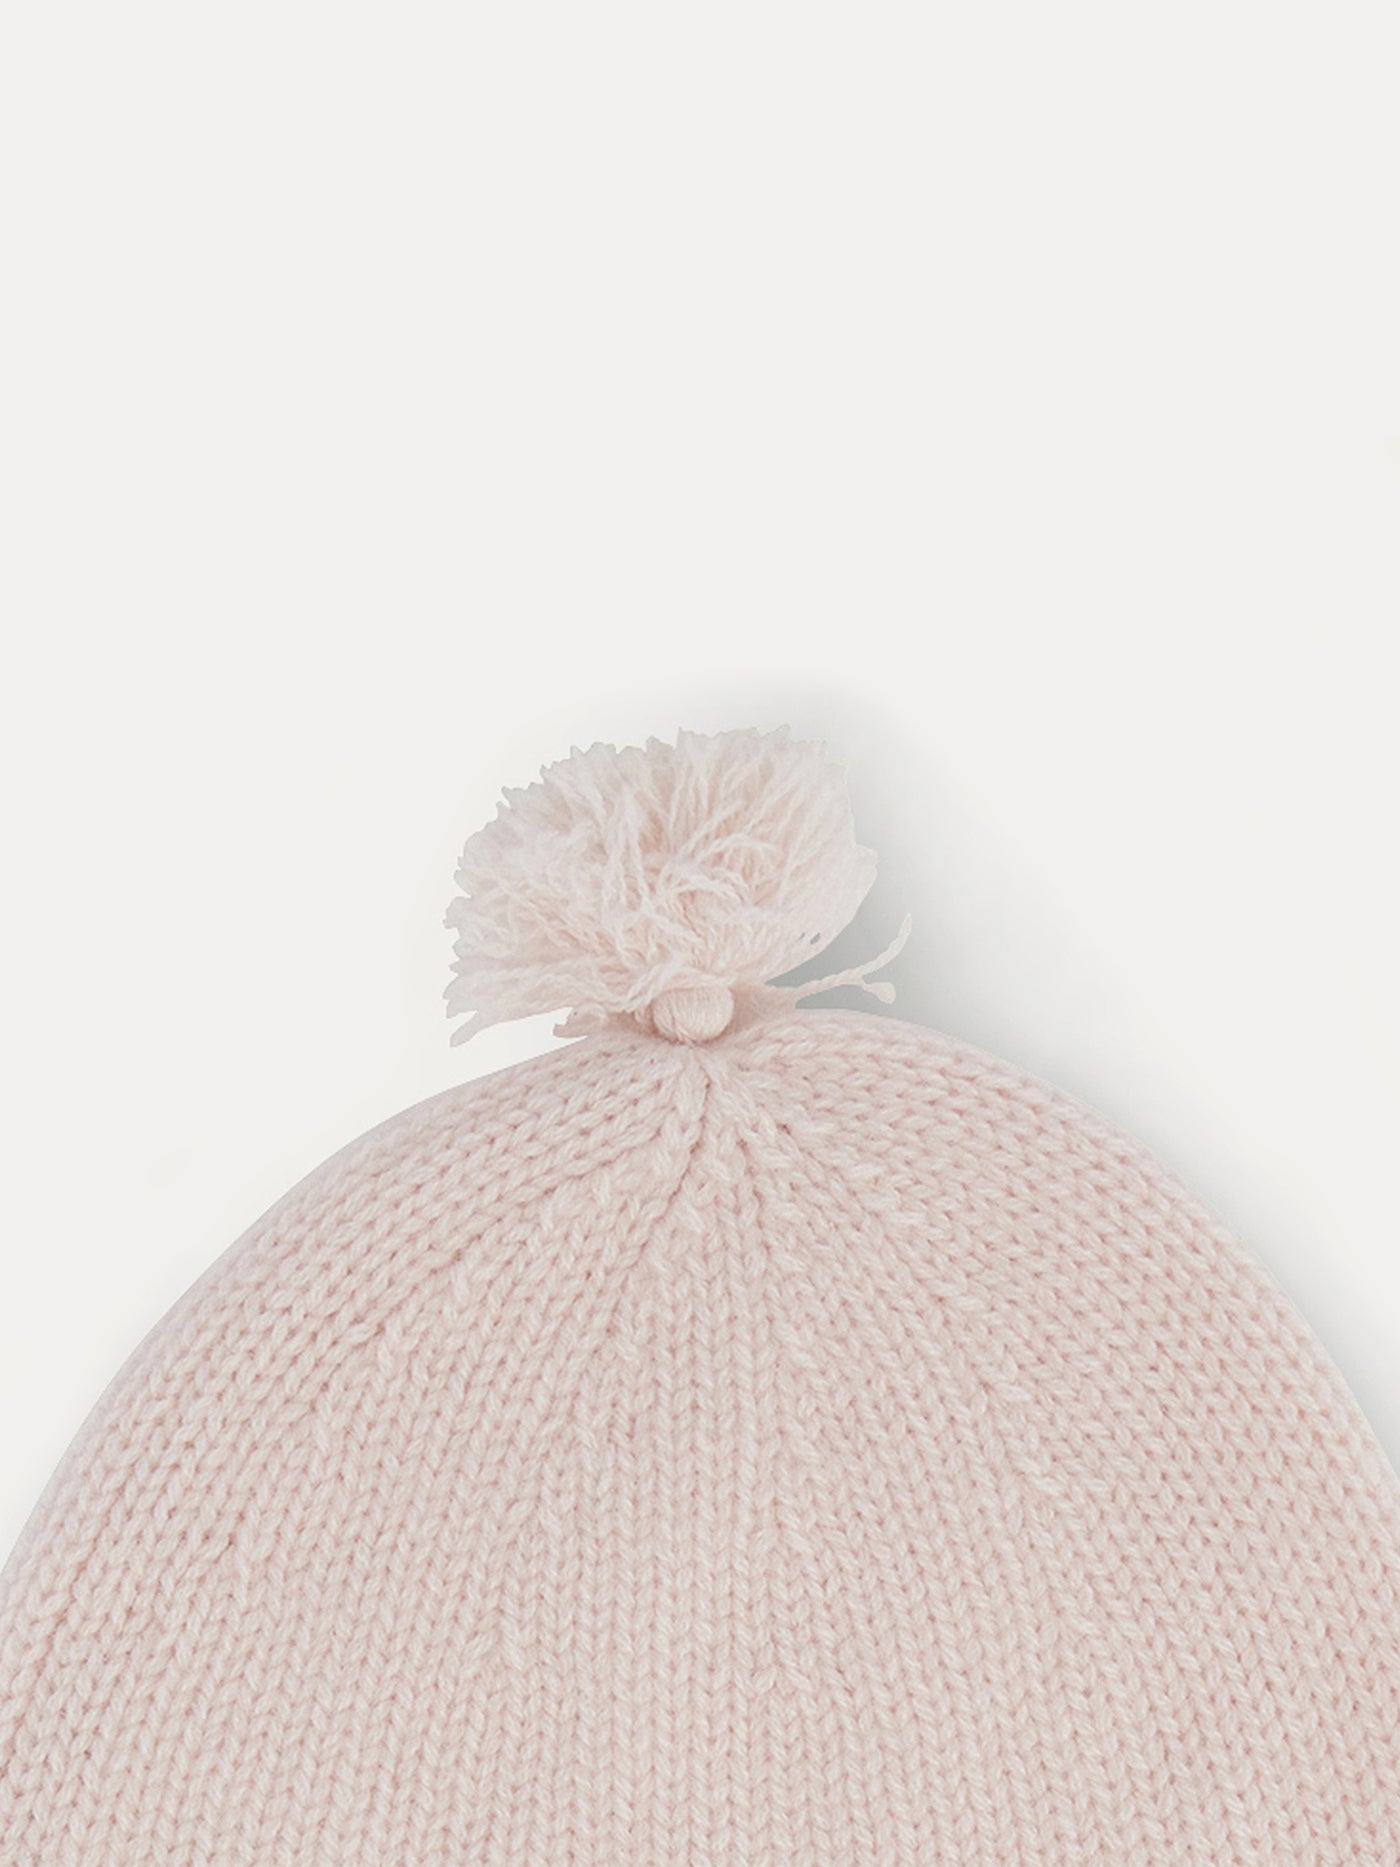 Babies' beanie hat pale pink